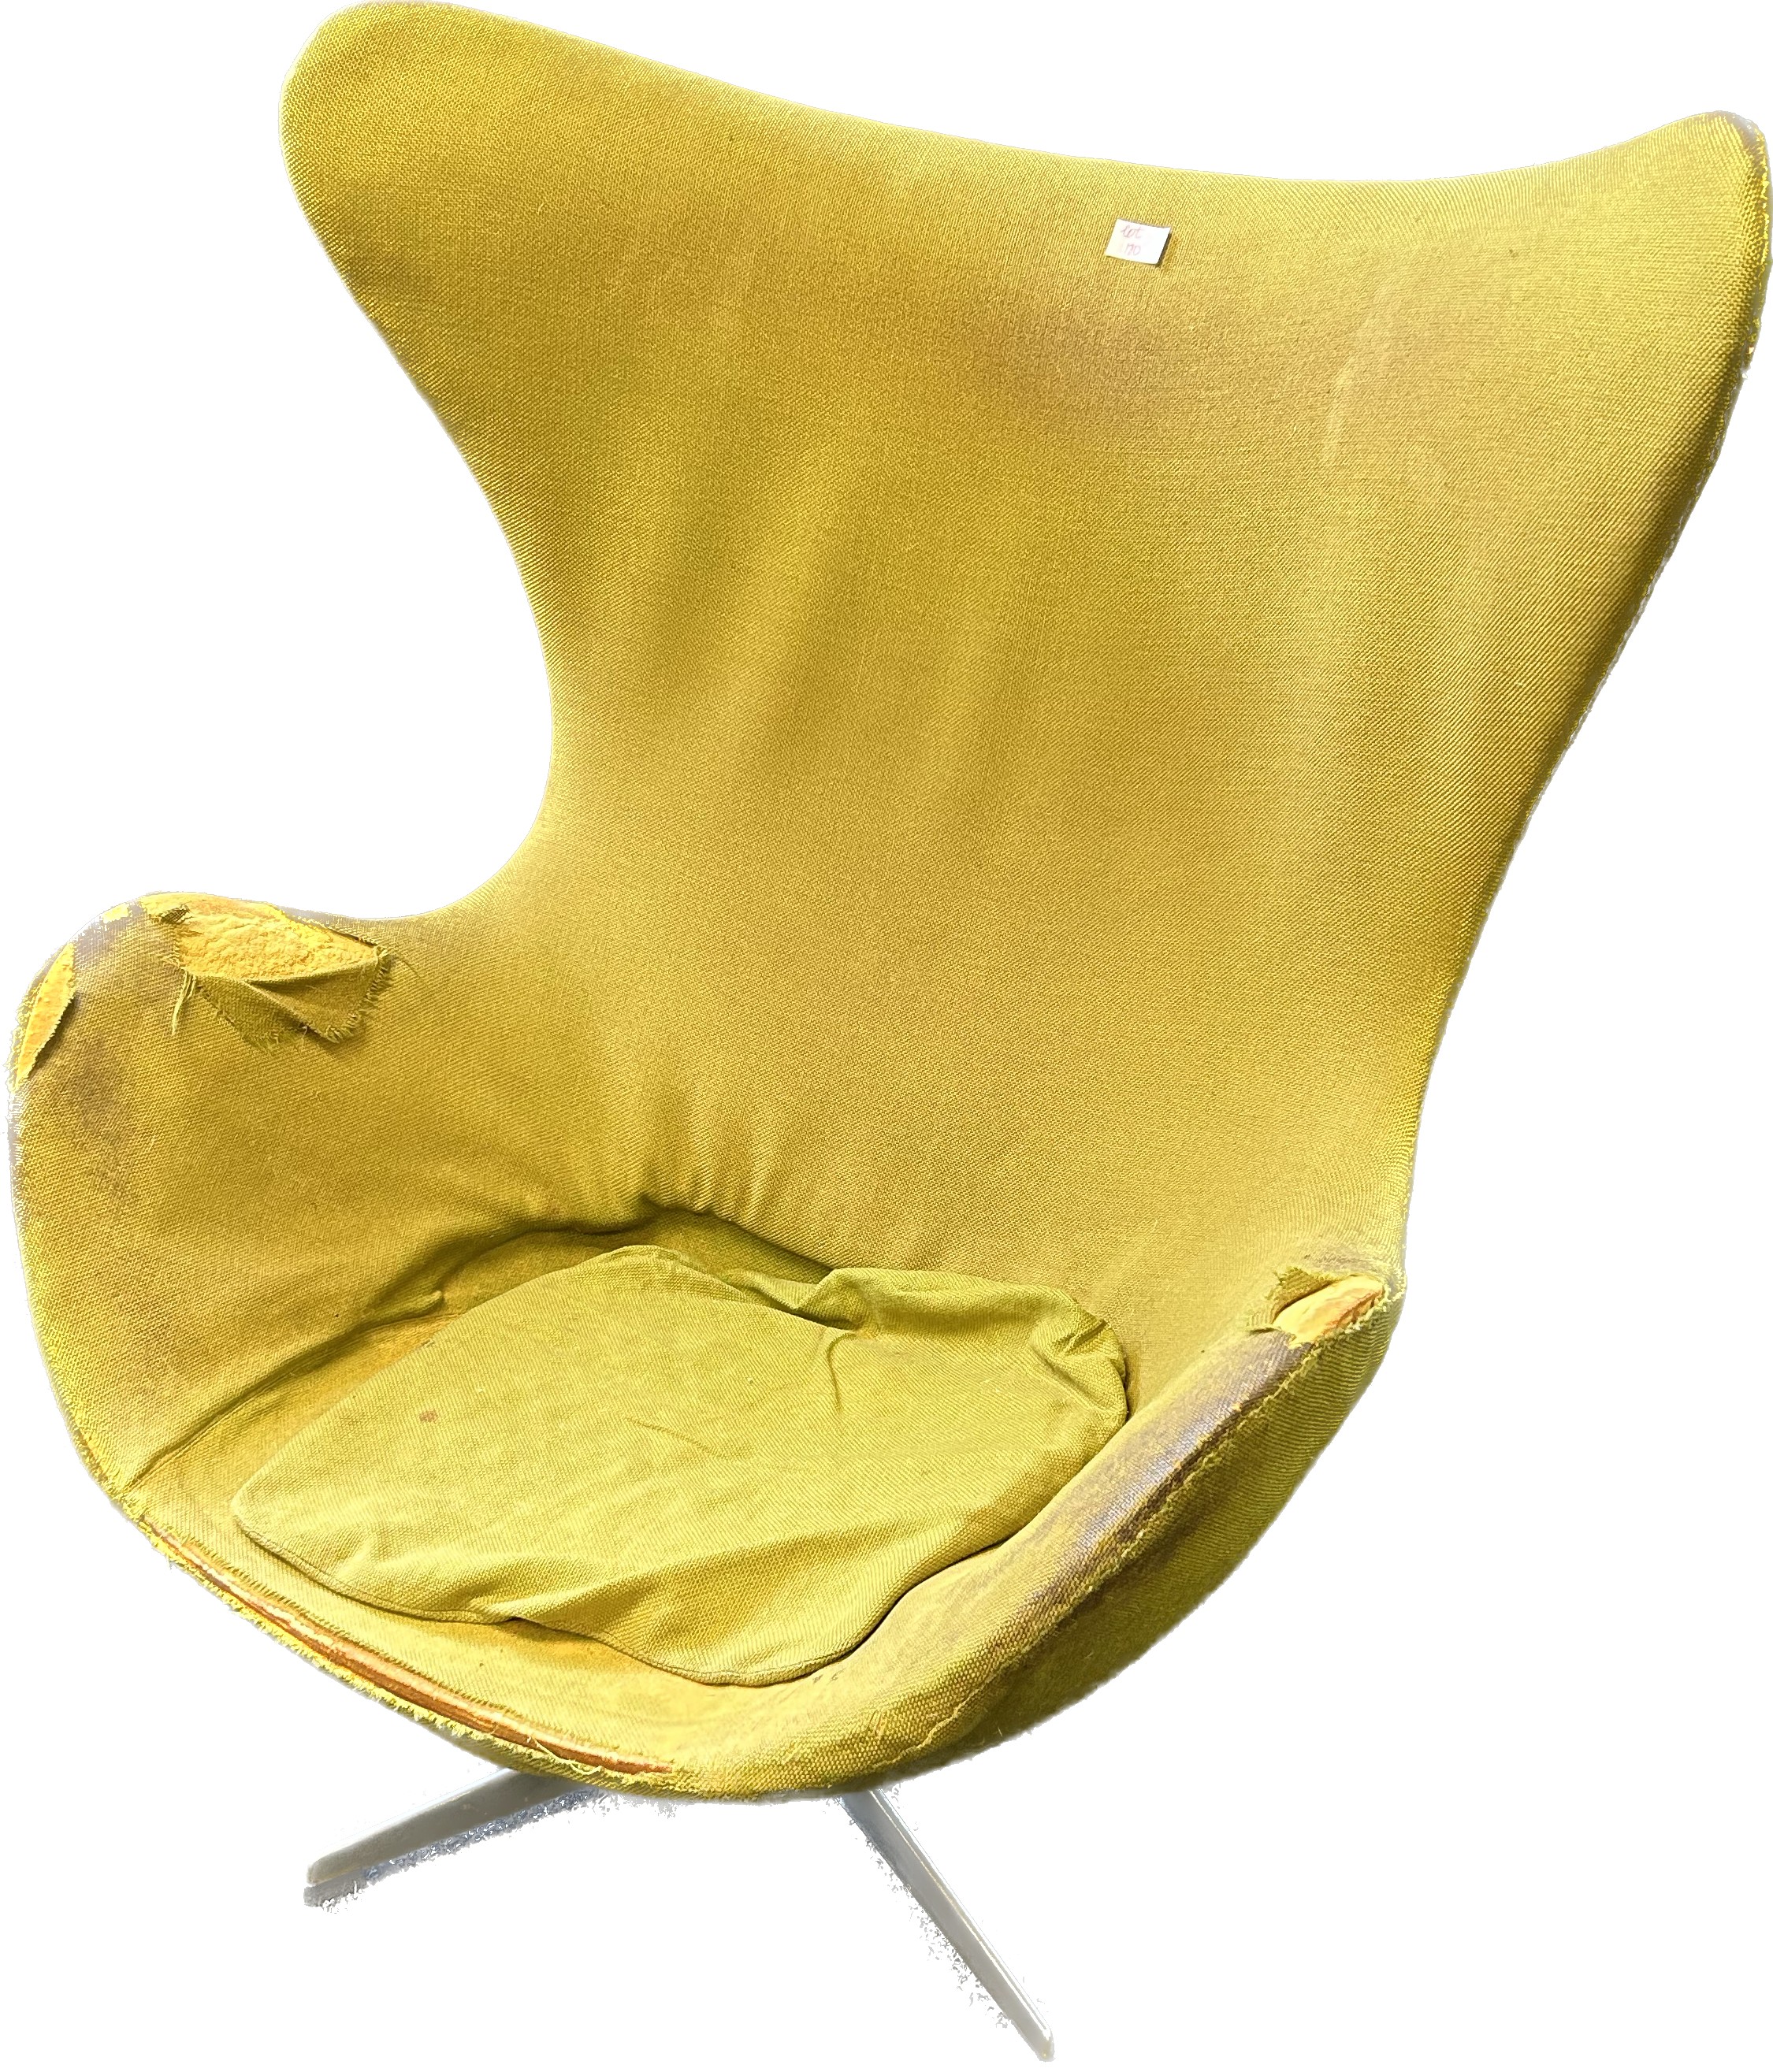 Vintage egg chair [Arne Jacobsen] - Image 4 of 5